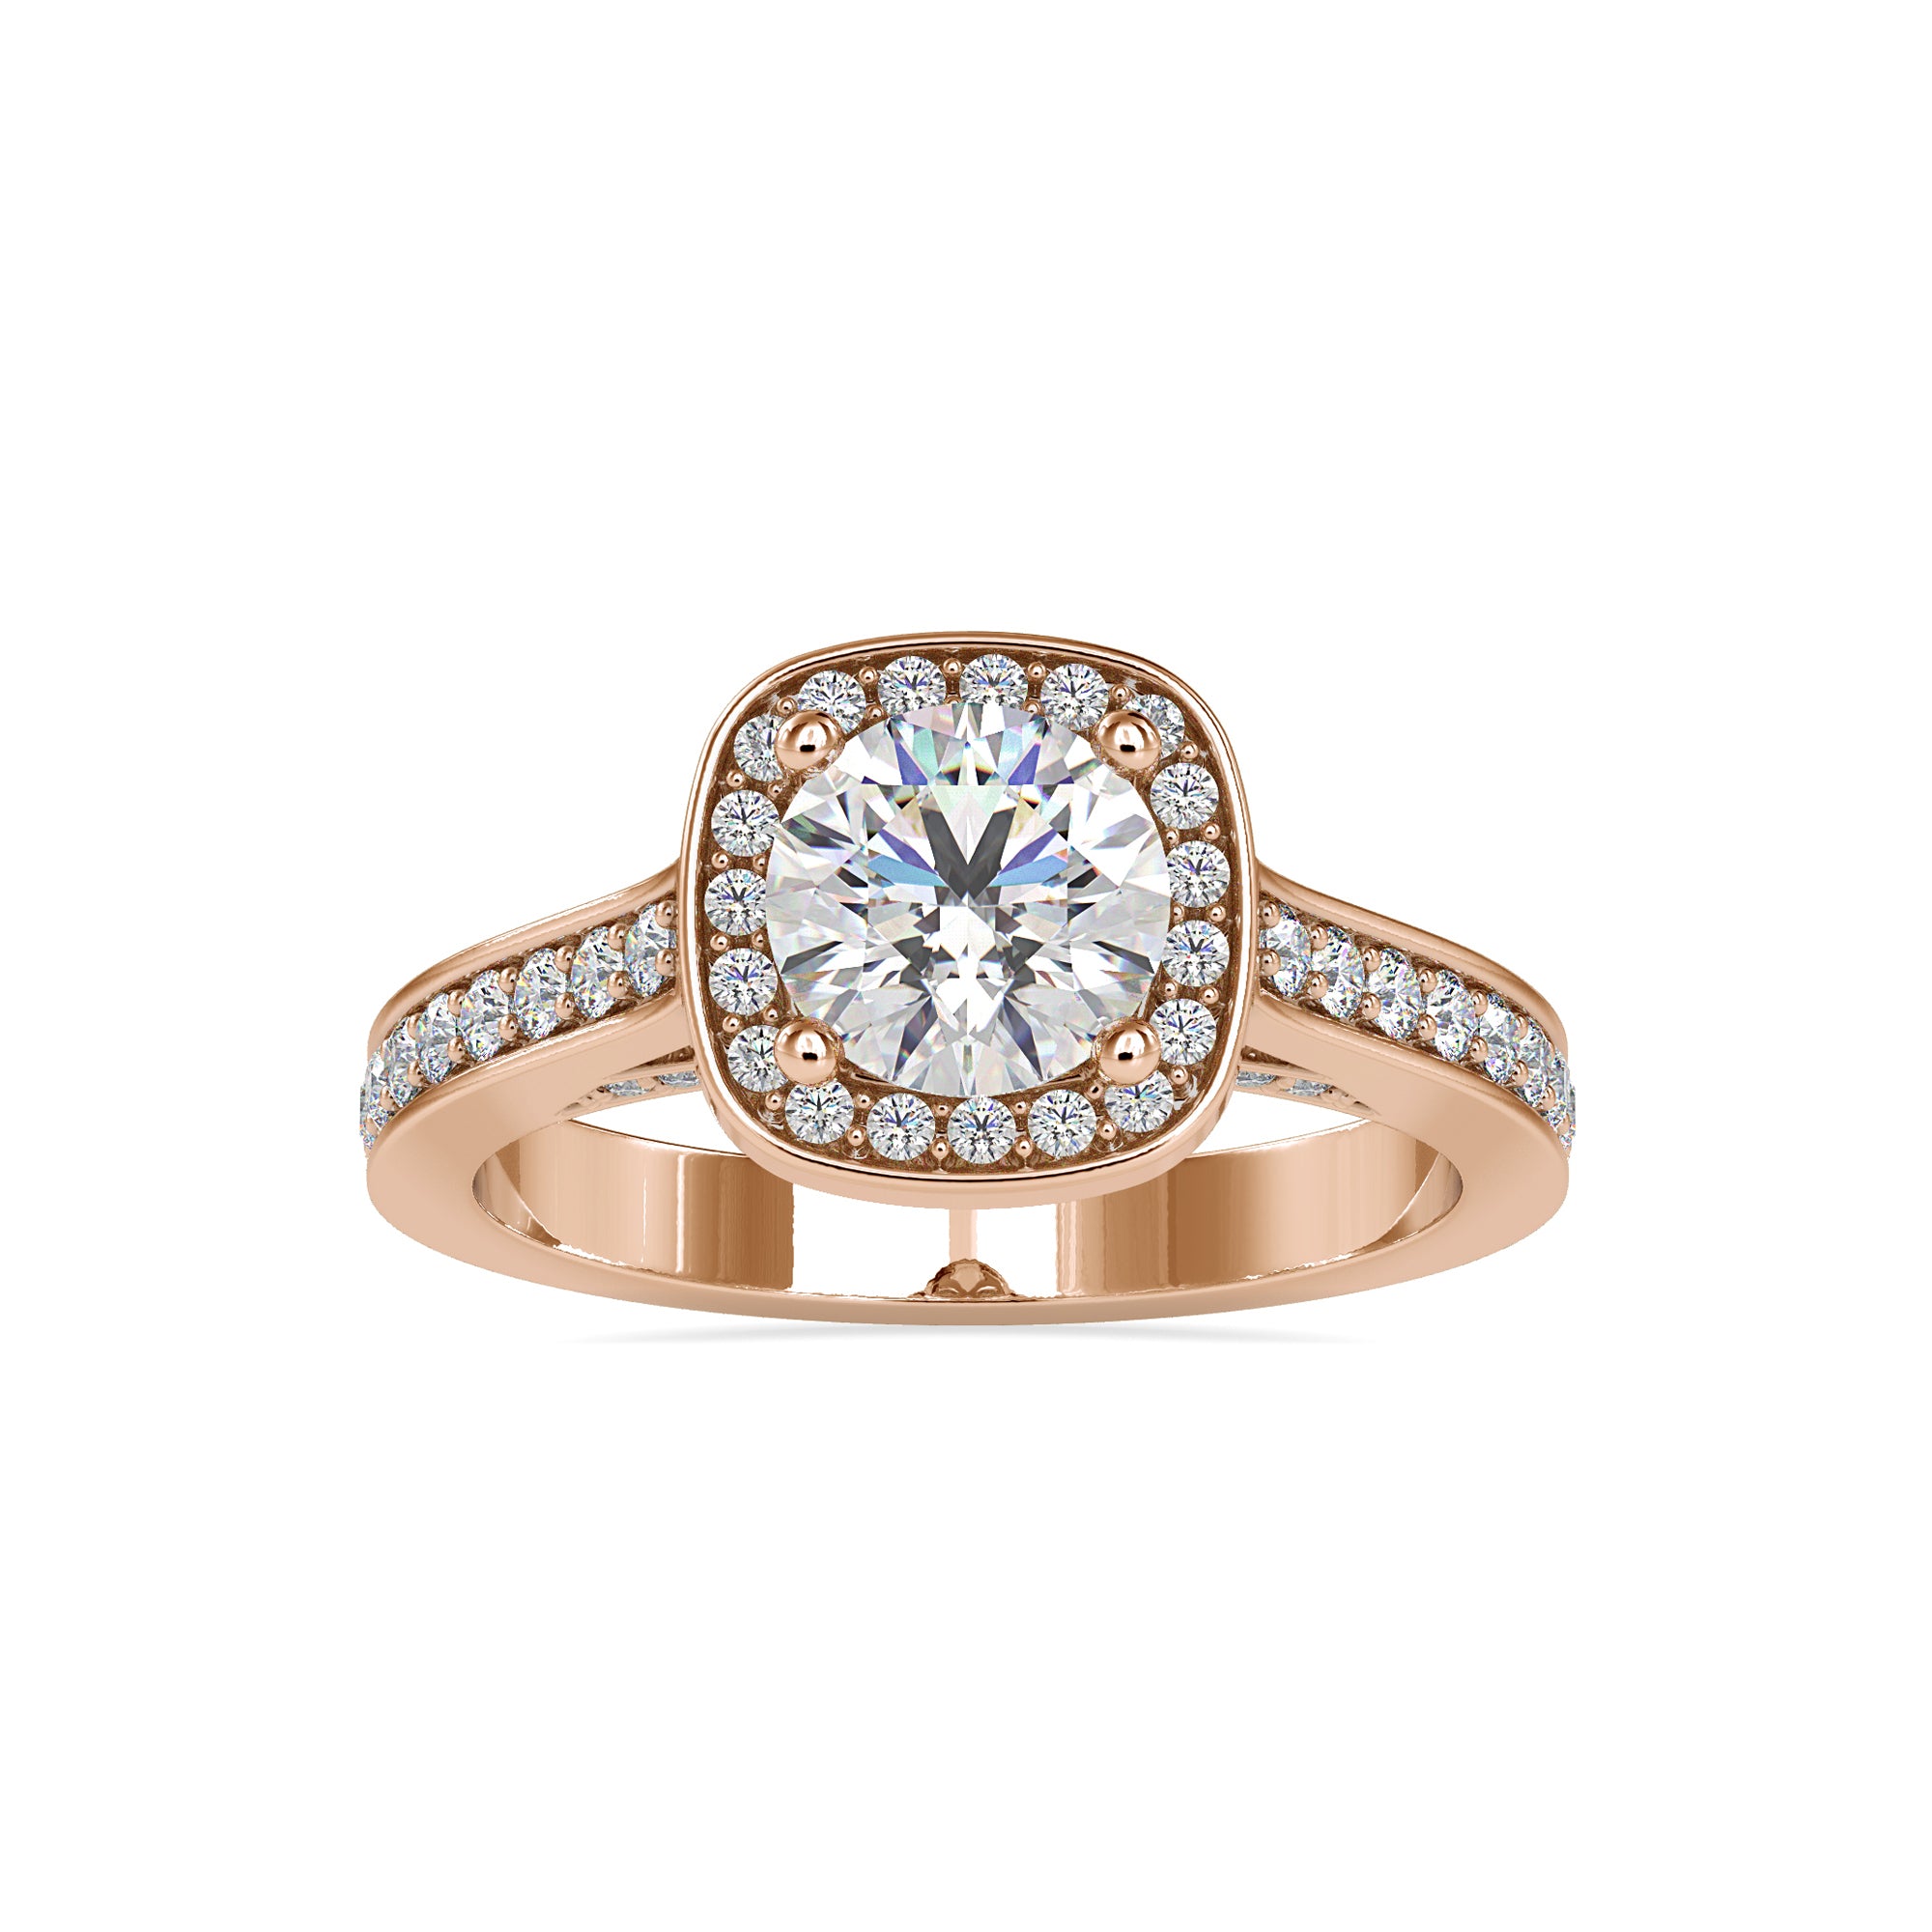 vintage style engagement rings - diamondrensu